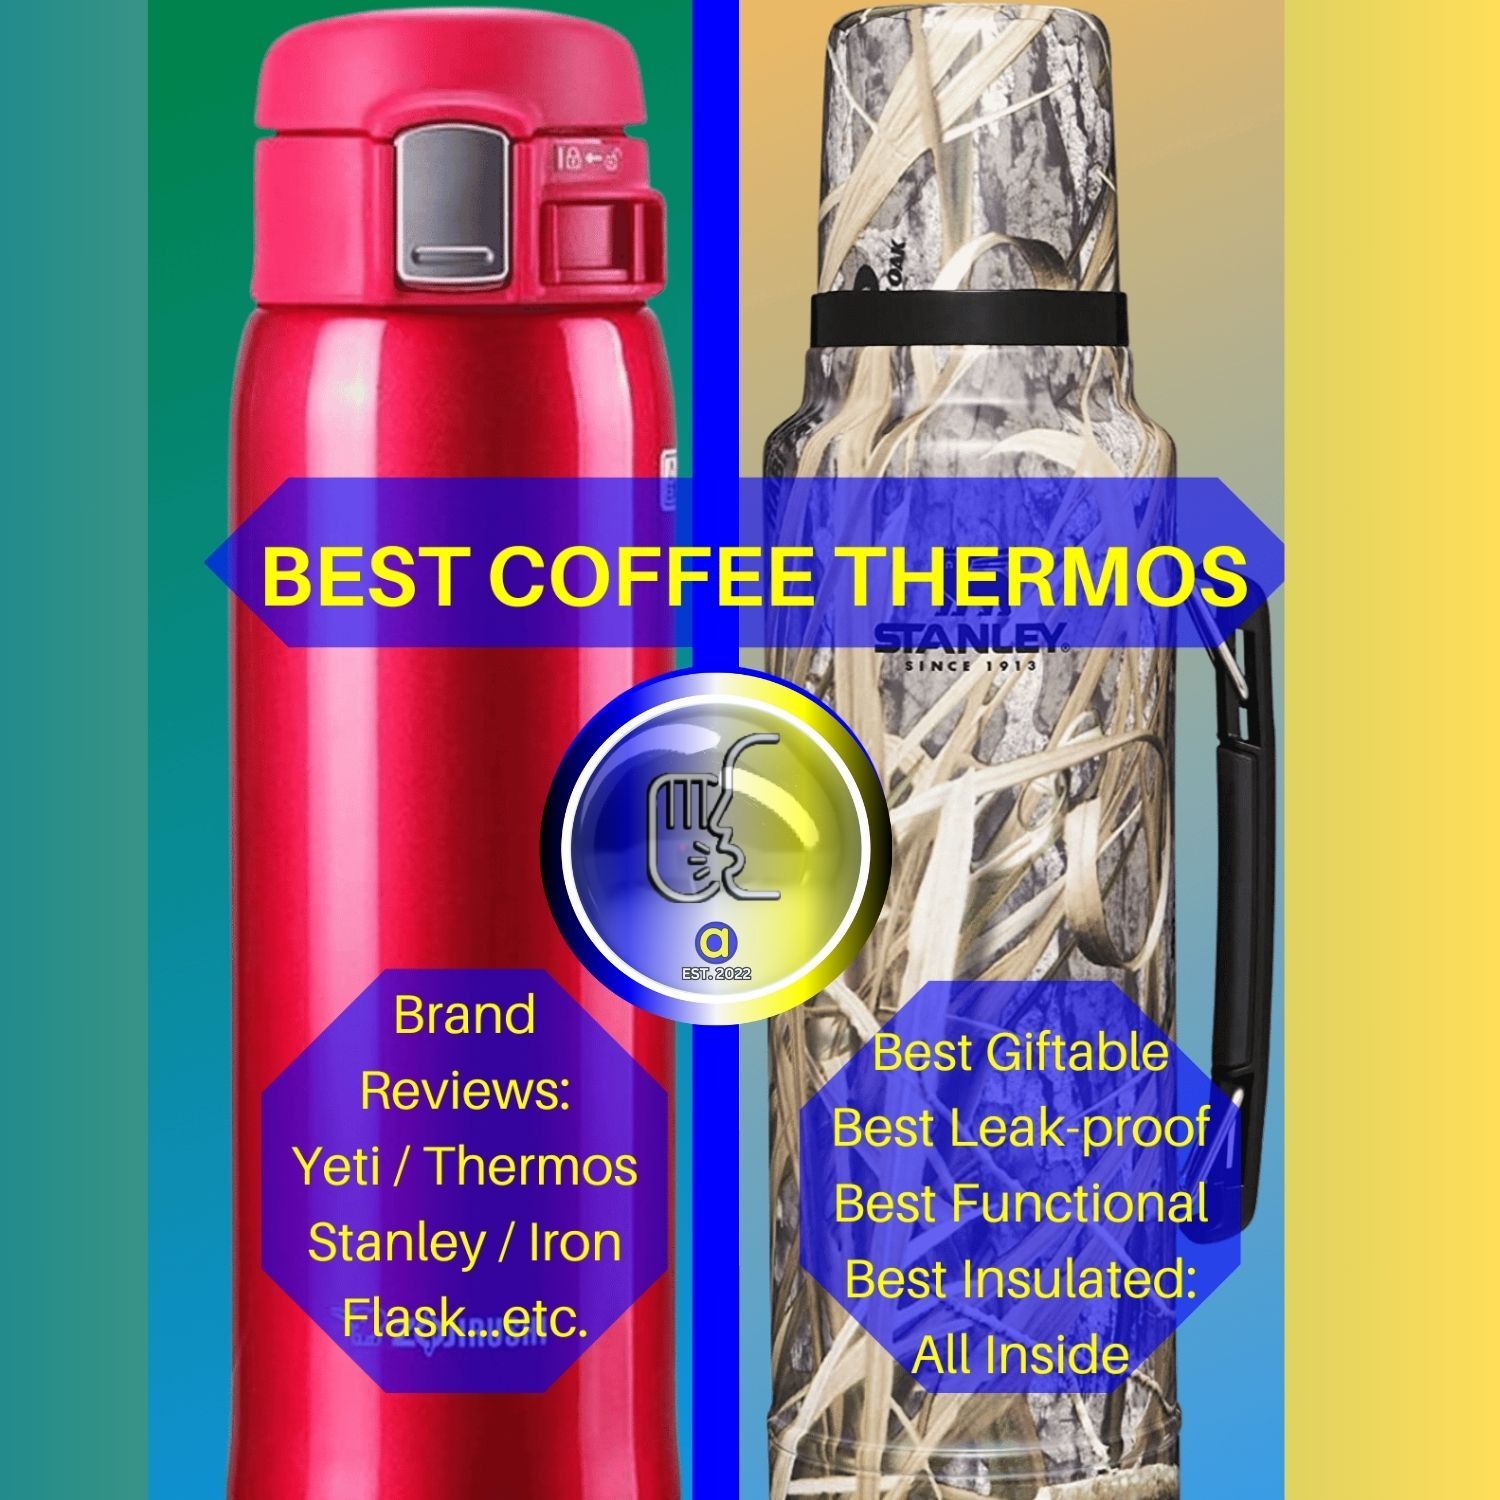 Best Coffee Thermos Amazon